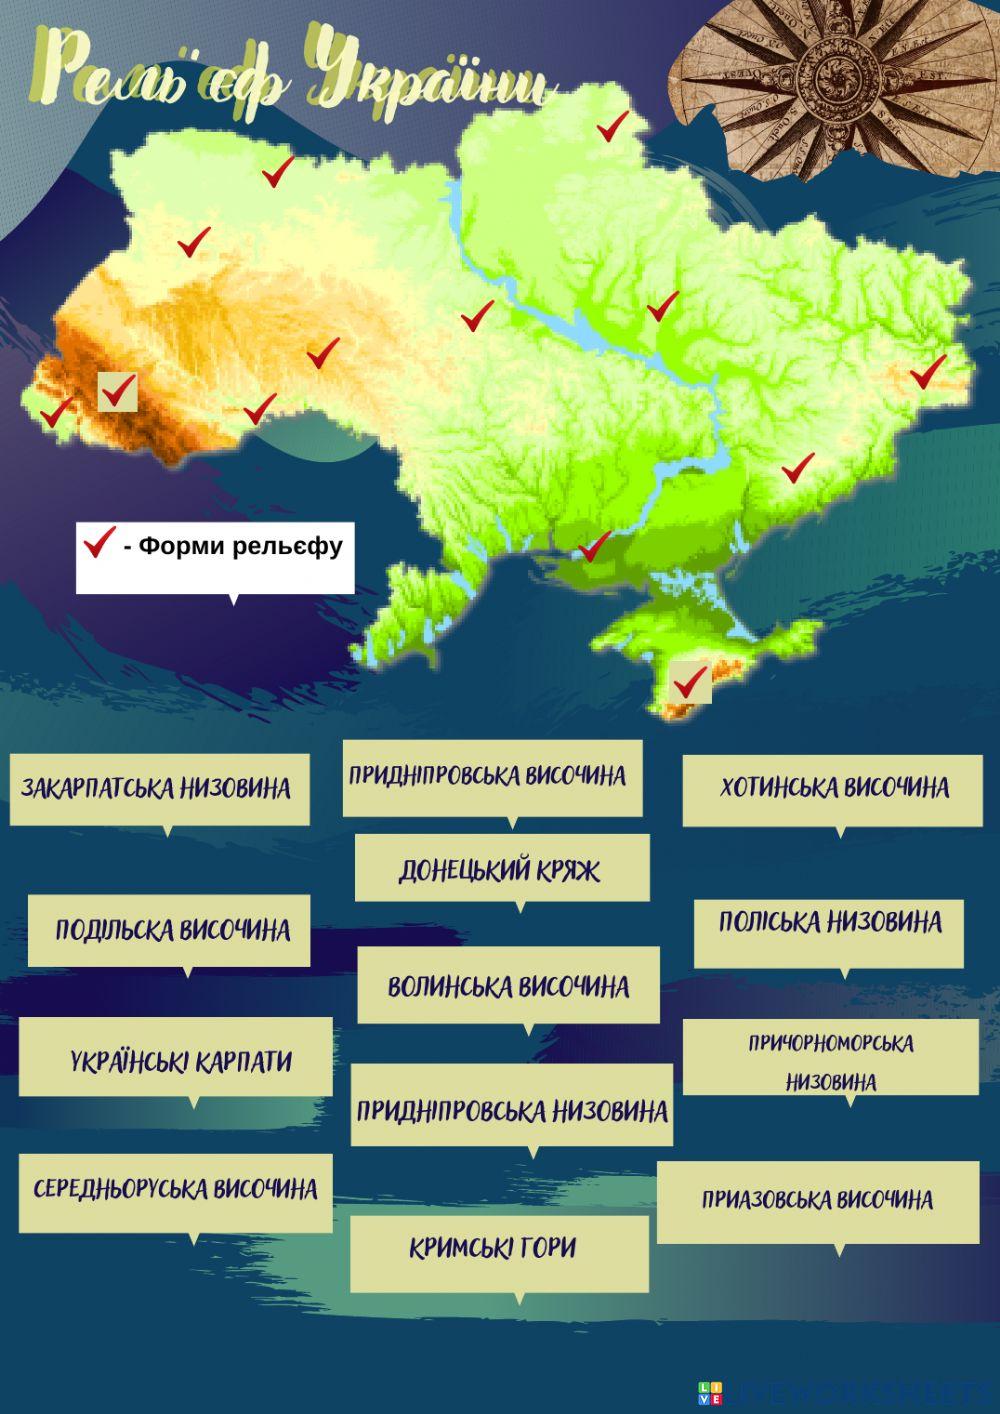 Форми рельєфу України